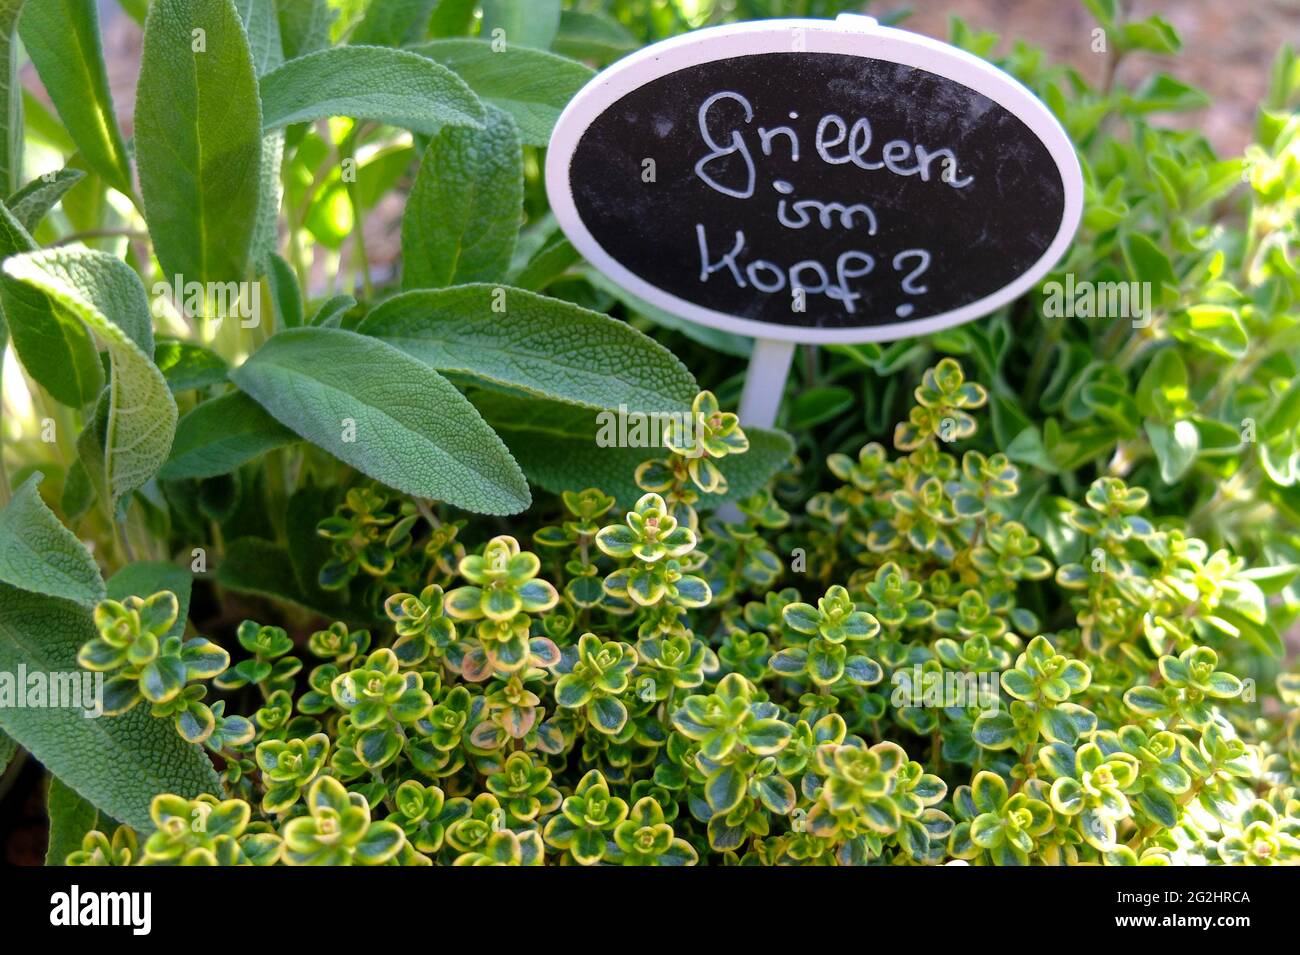 Herbs for grilling: thyme (Thymus citriodorus), sage (Salvia officinalis) and oregano (Origanum) Stock Photo